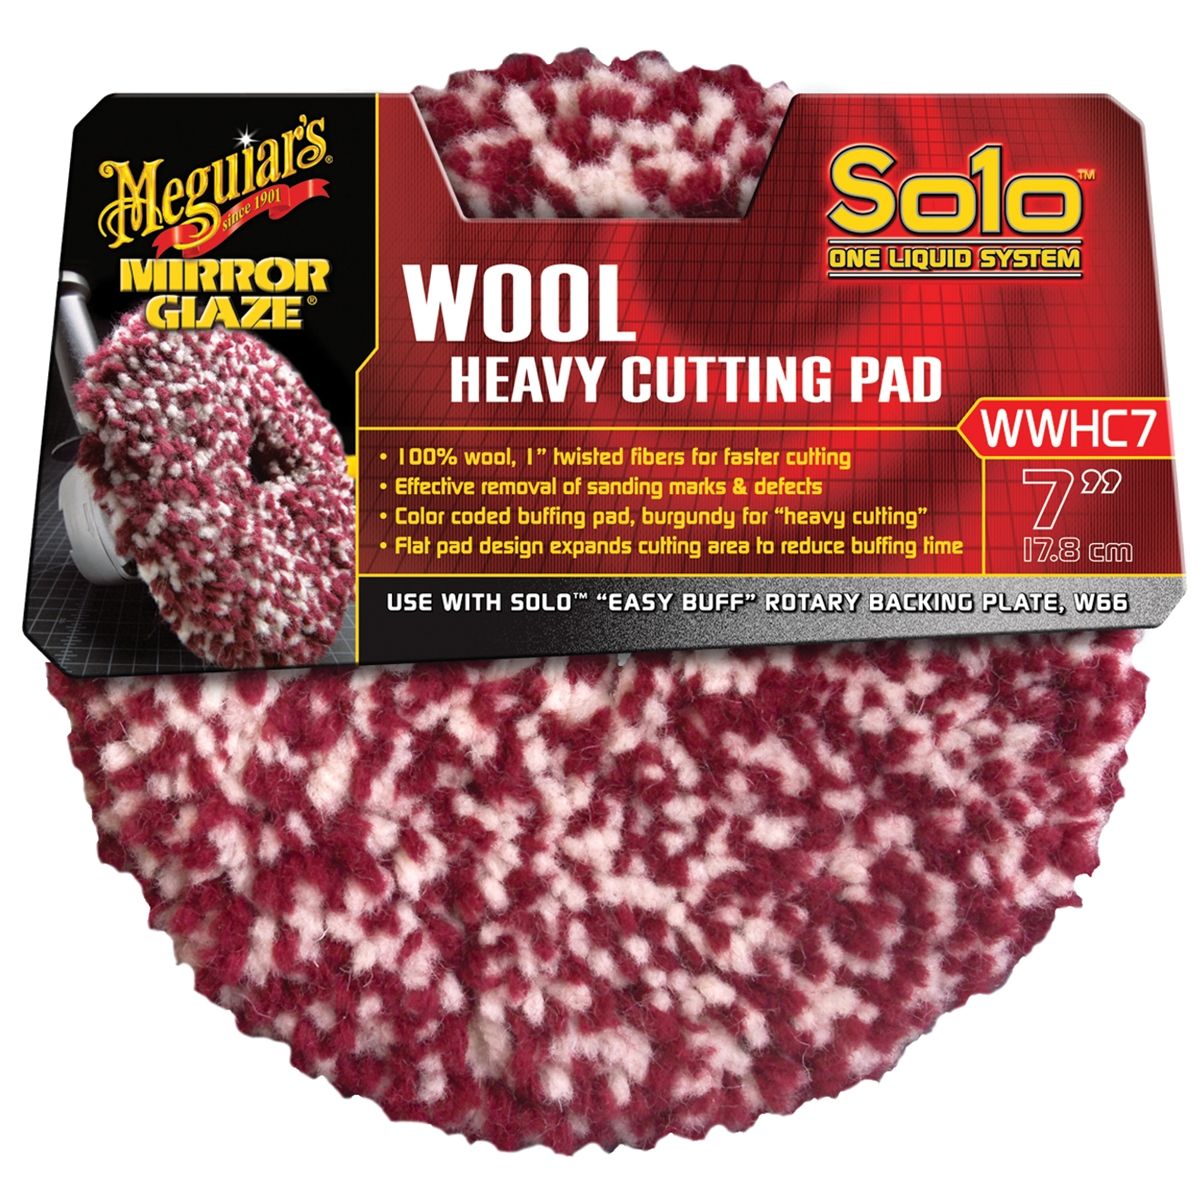 Solo One Liquid System Wool Heavy Cutting Pad